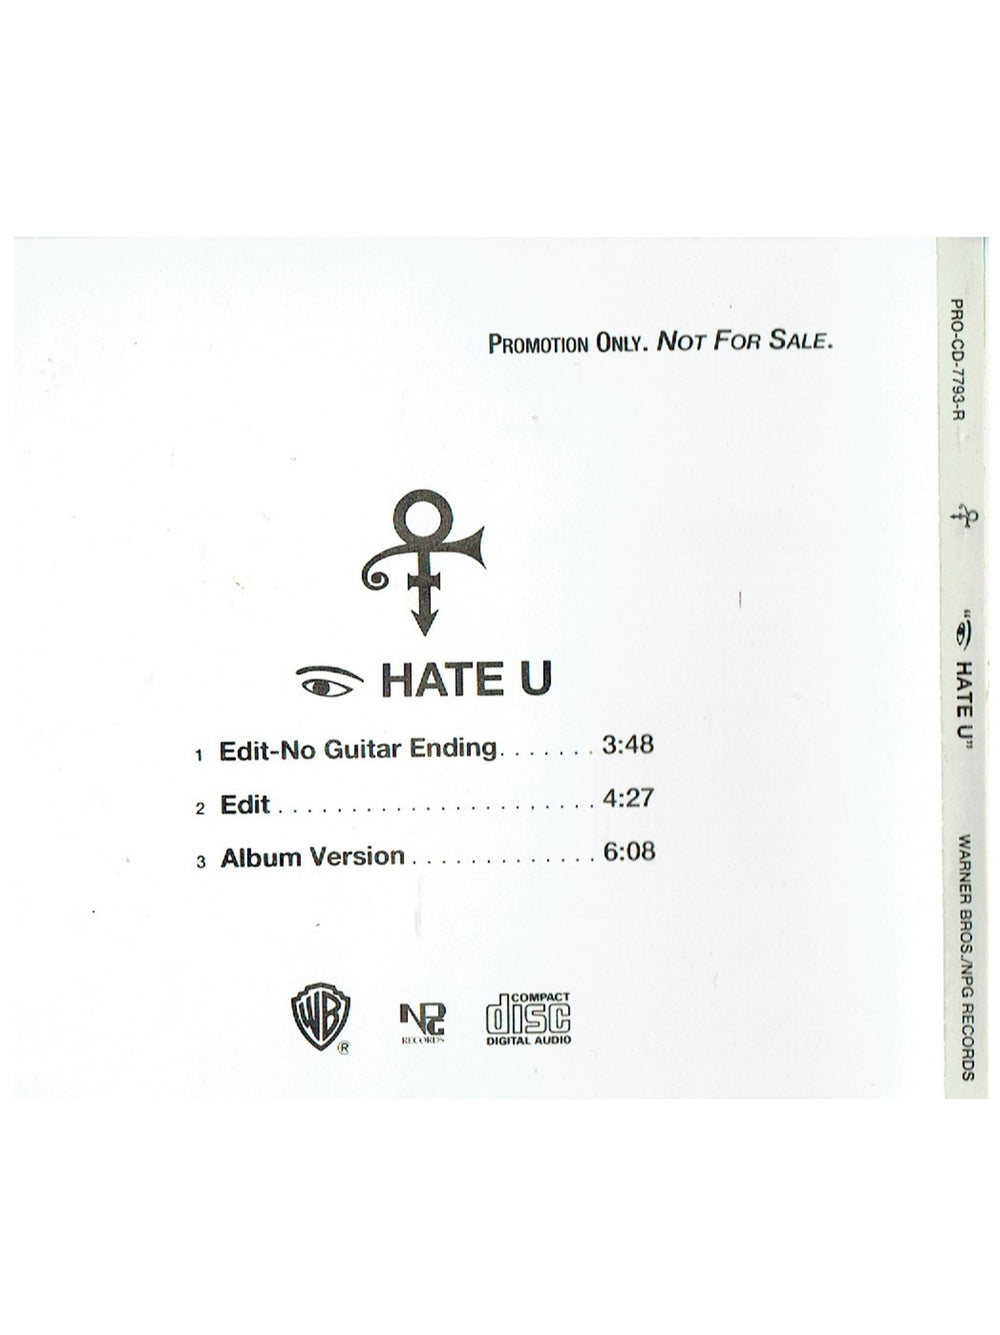 Prince – O(+> Eye Hate U Promotional Only CD Single 3 Track USA Release 1995